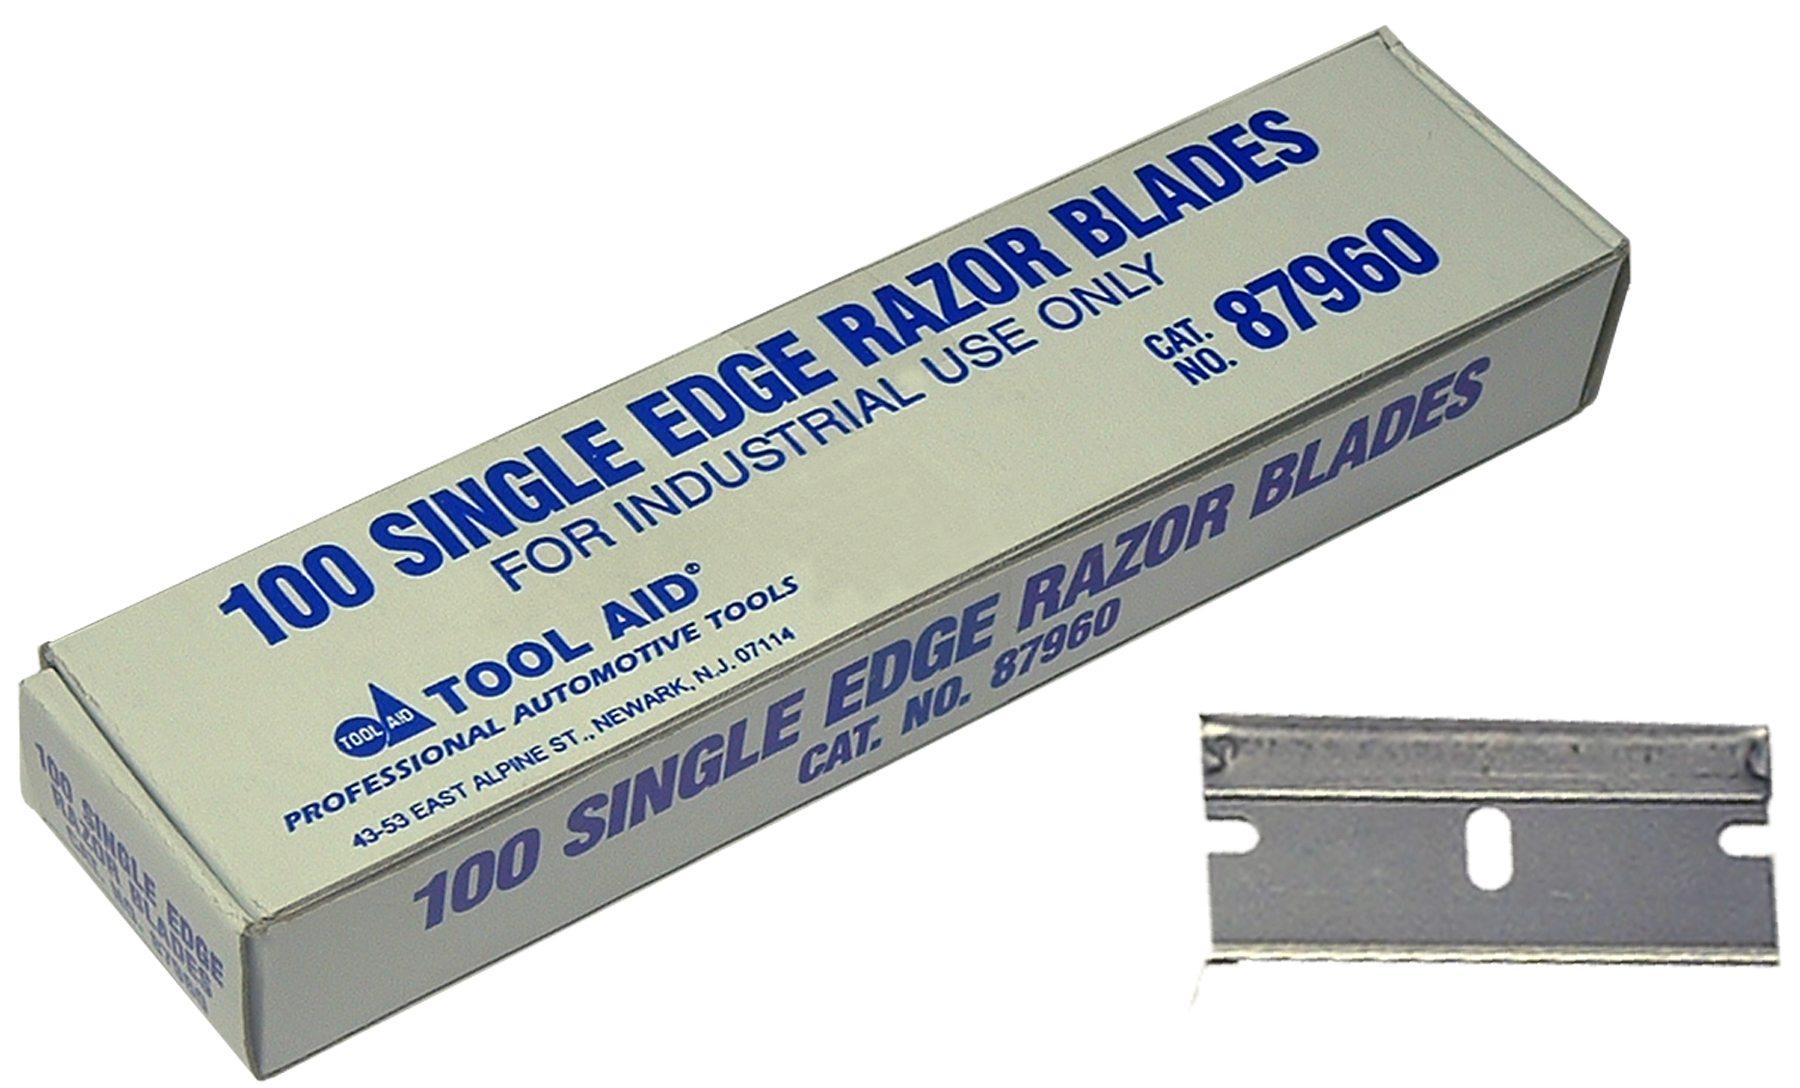 5000 BLADES .009 #9 Industrial Single Edge Razor Blades Made In USA Heavy Duty! 